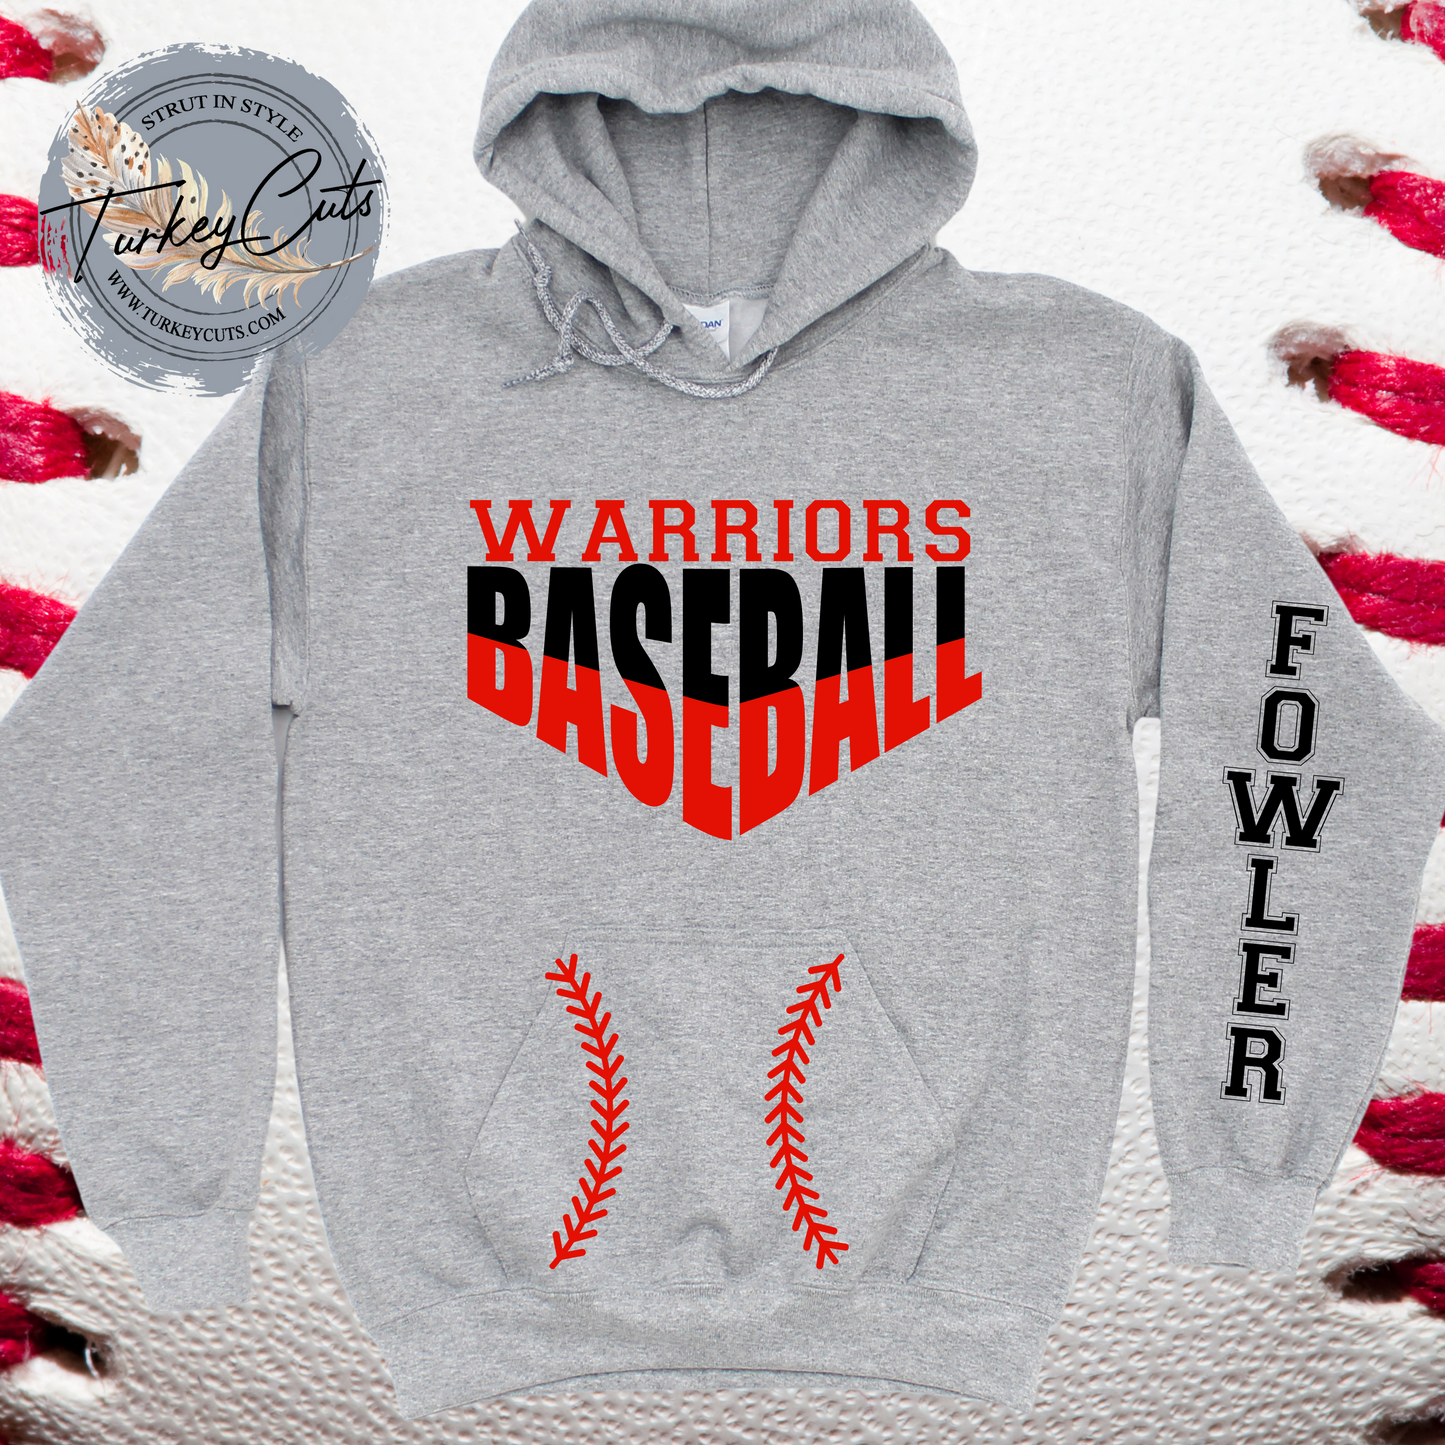 Warriors Baseball Hoodie (Name Included On Sleeve)